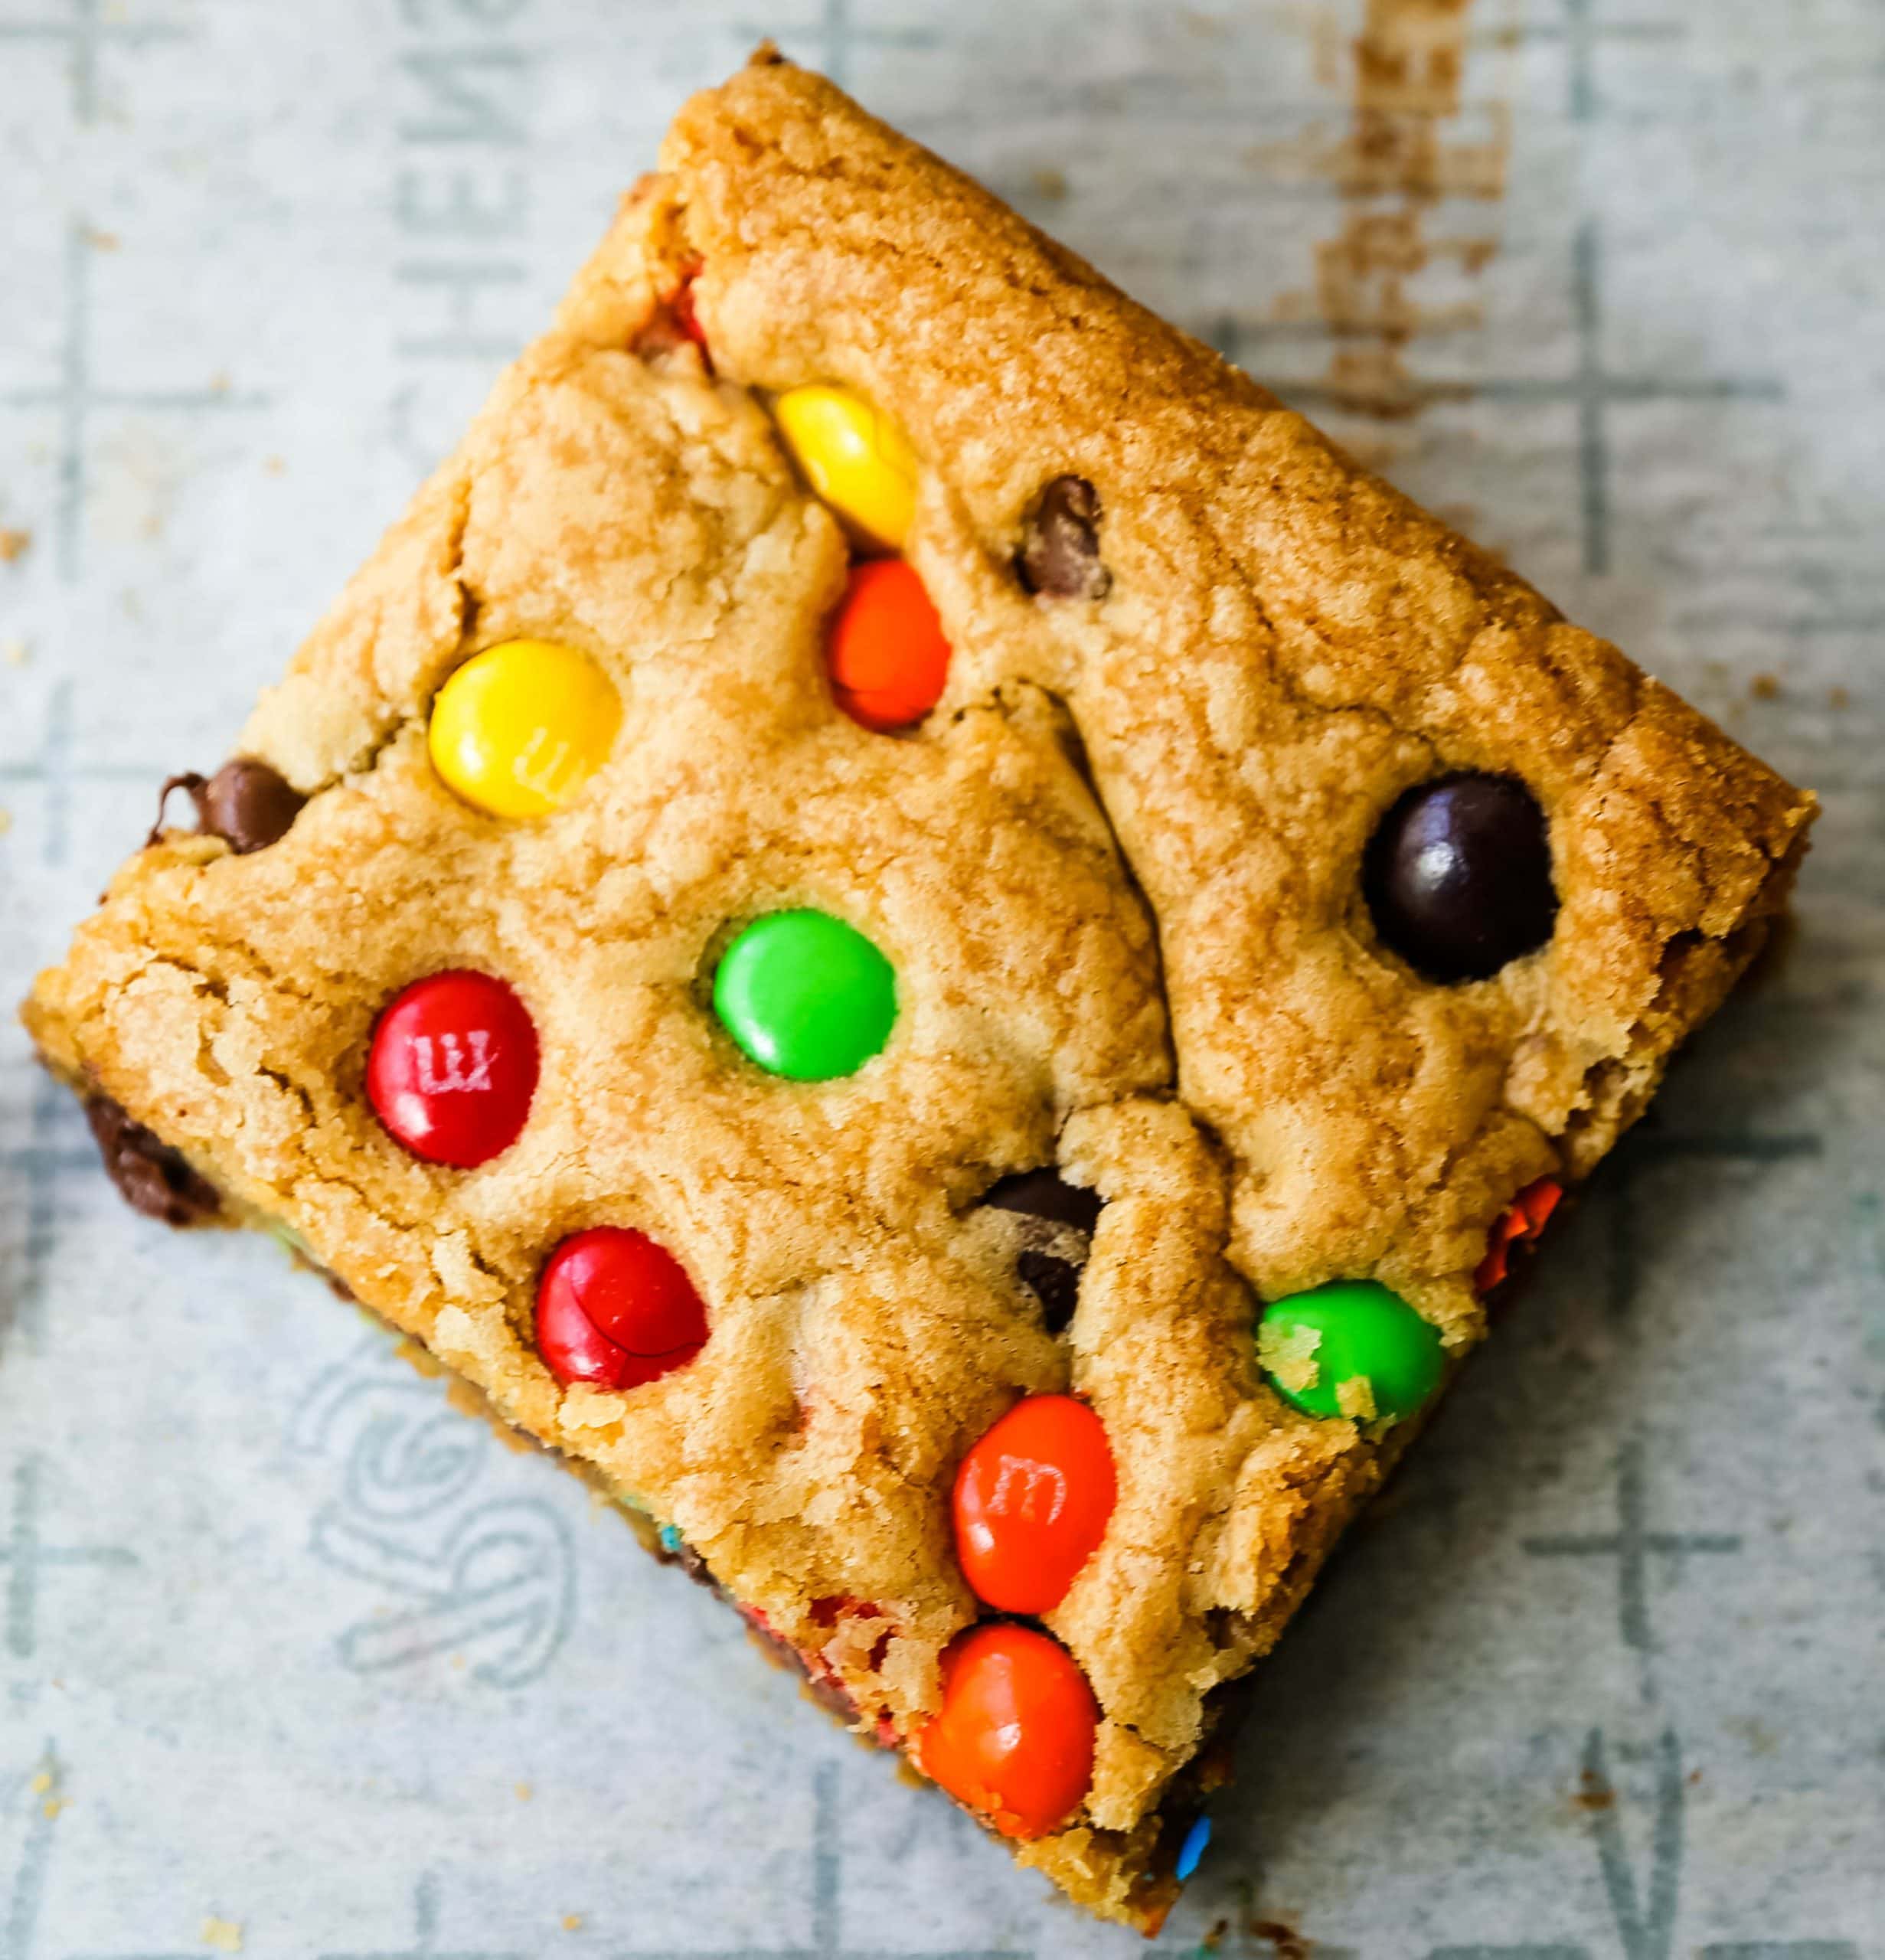 M & M Cookie Bars Soft chewy brown sugar M & M blondie cookie bars. The best M & M Cookie Bars recipe! www.modernhoney.com #bars #dessertbars #chocolatechipcookiebars